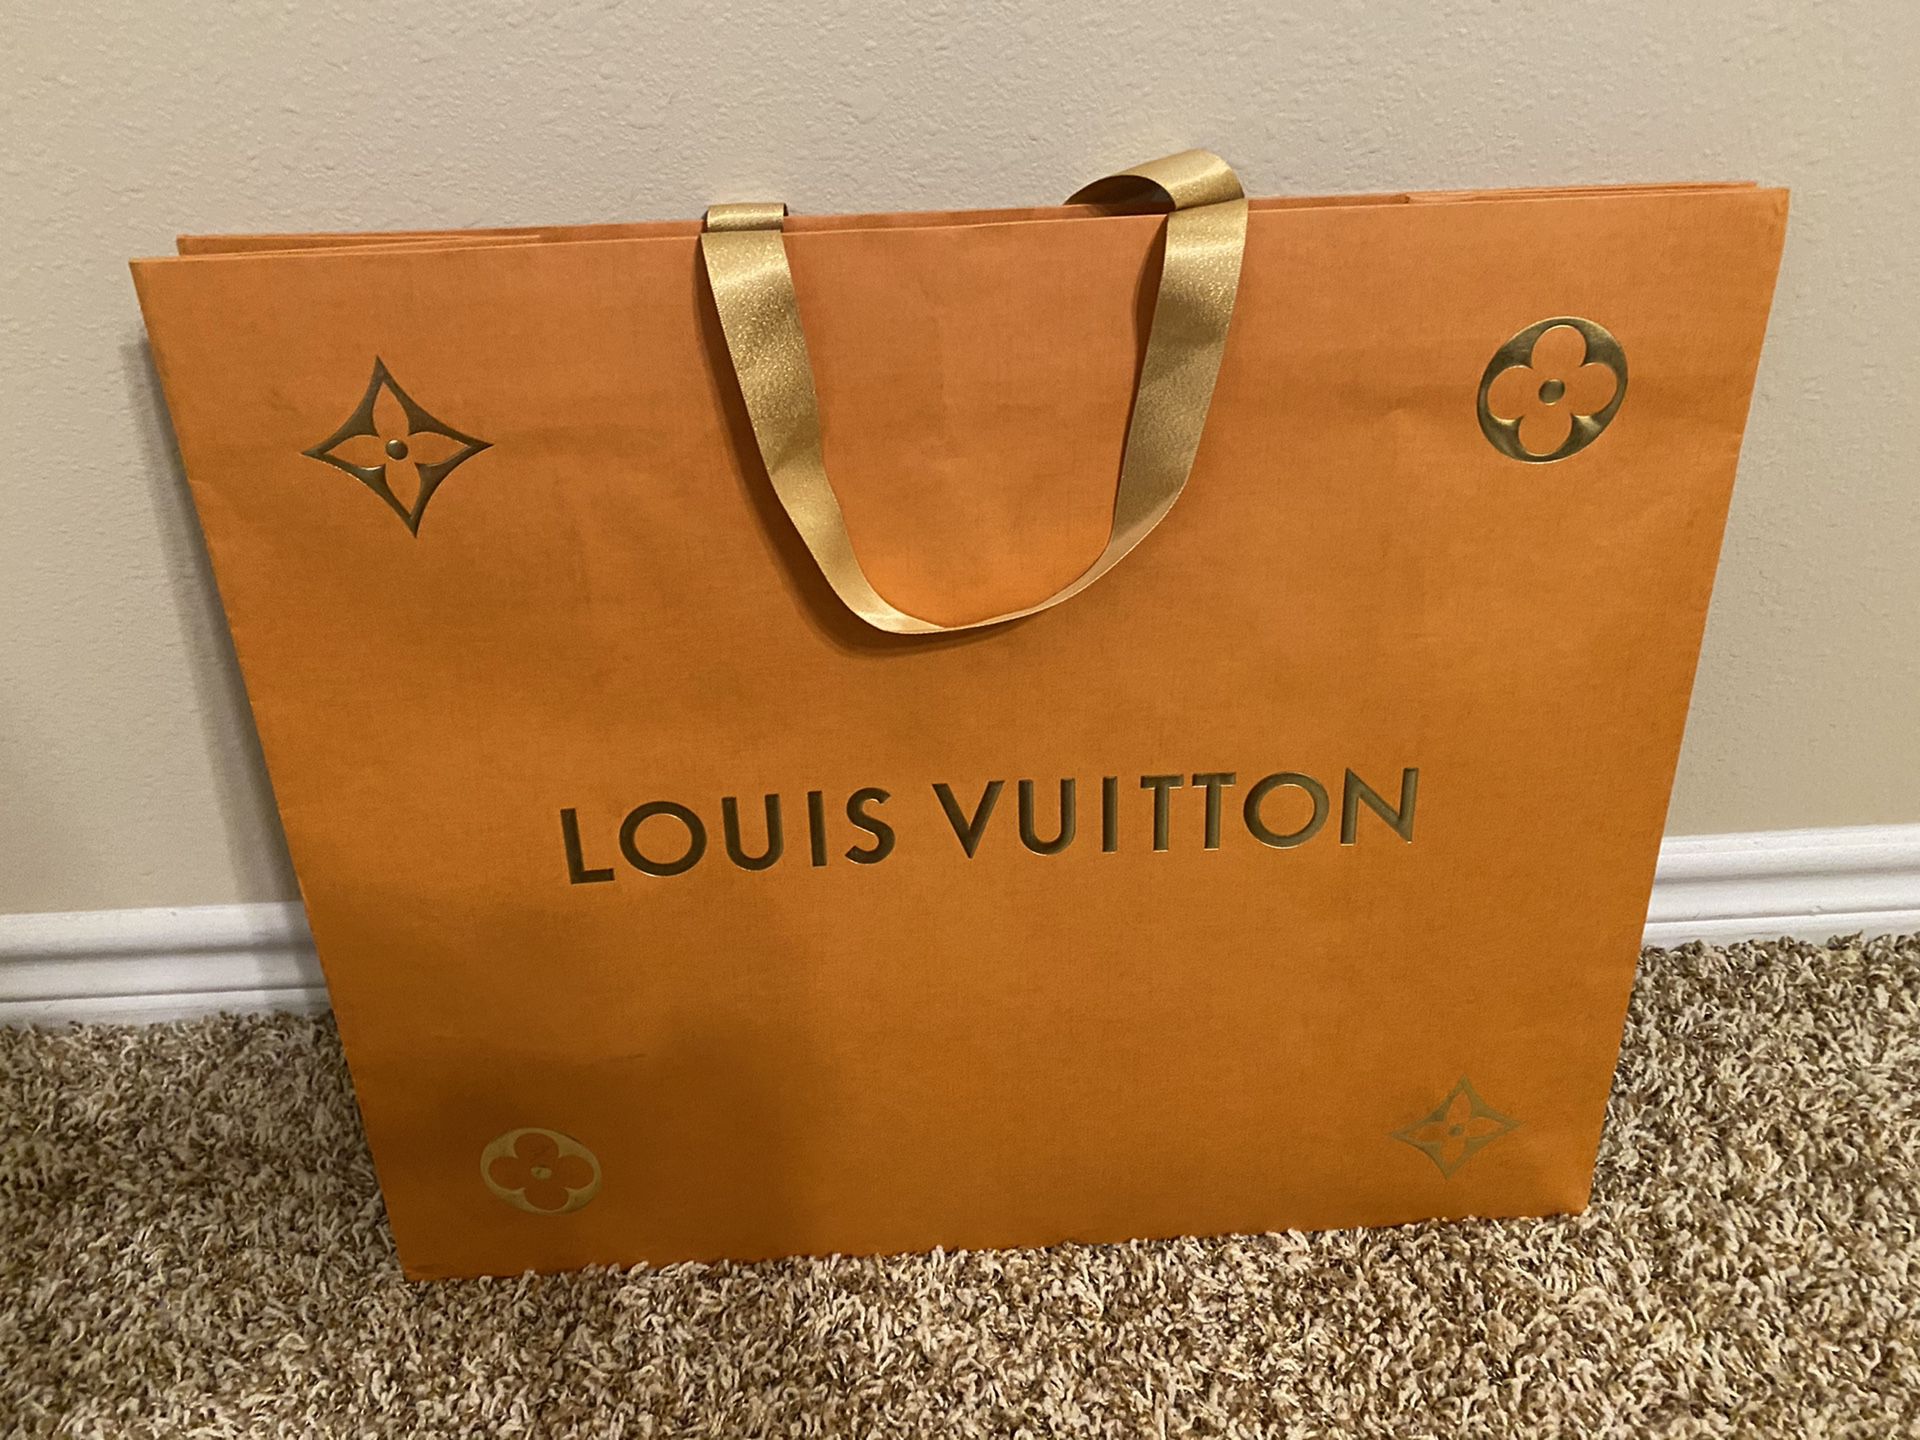 Louis Vuitton Bag and envelope